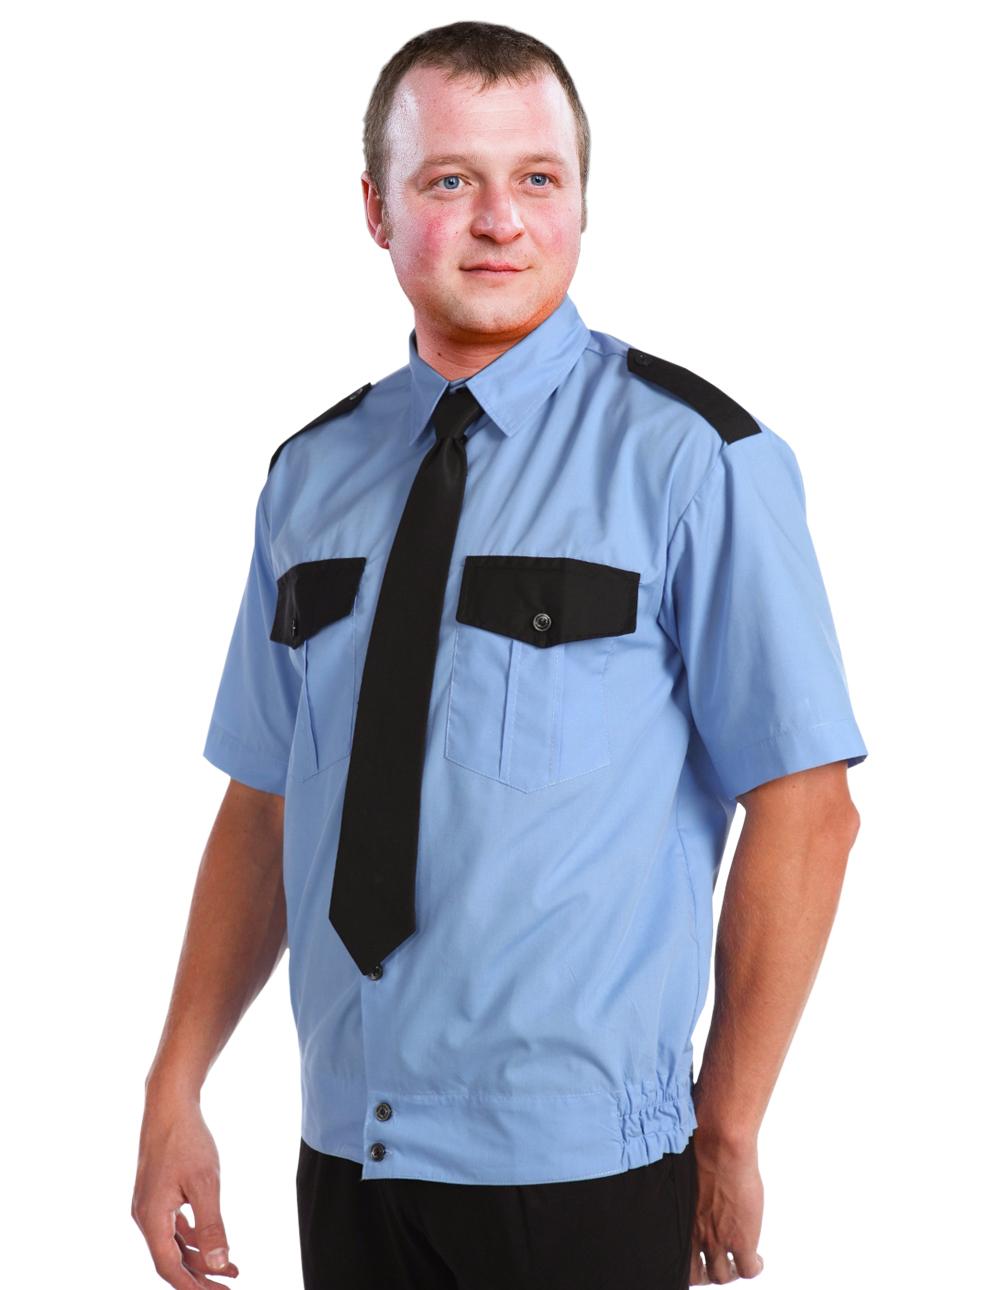 Рубашка Охранника на резинке цв.Голубой короткий рукав 